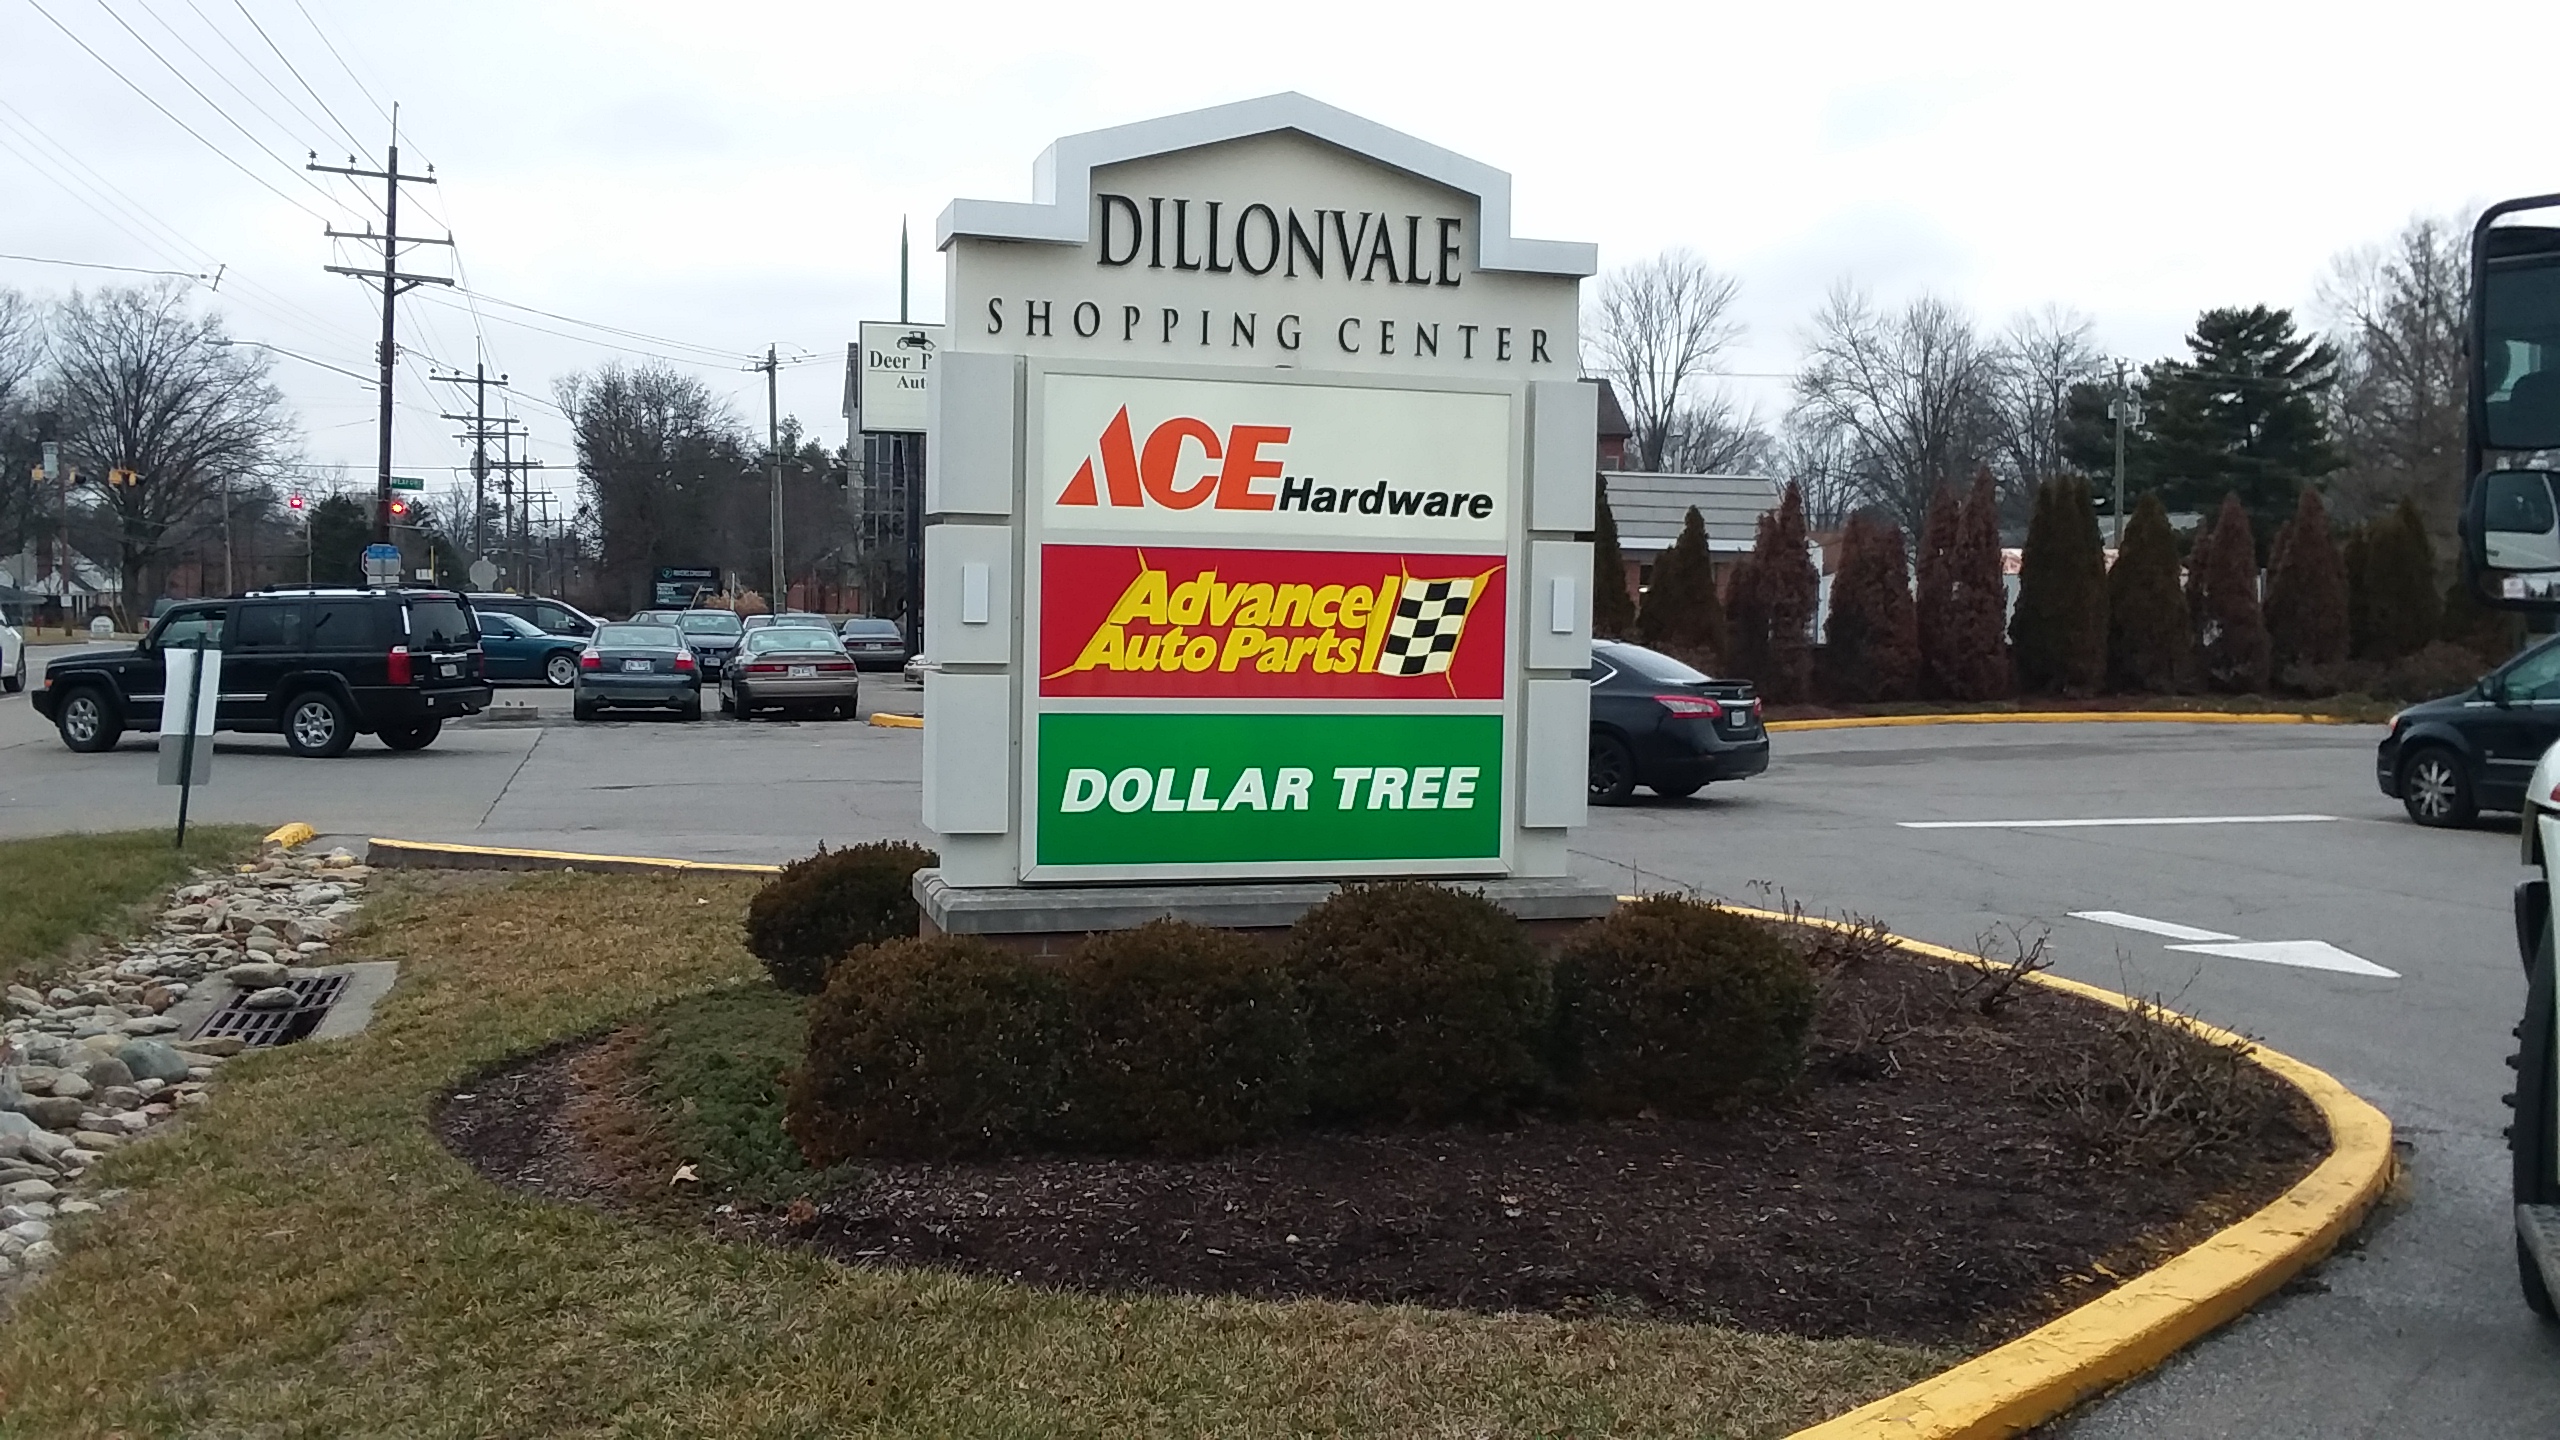 Dillonvale Shopping Center Cincinnati, OH Paran